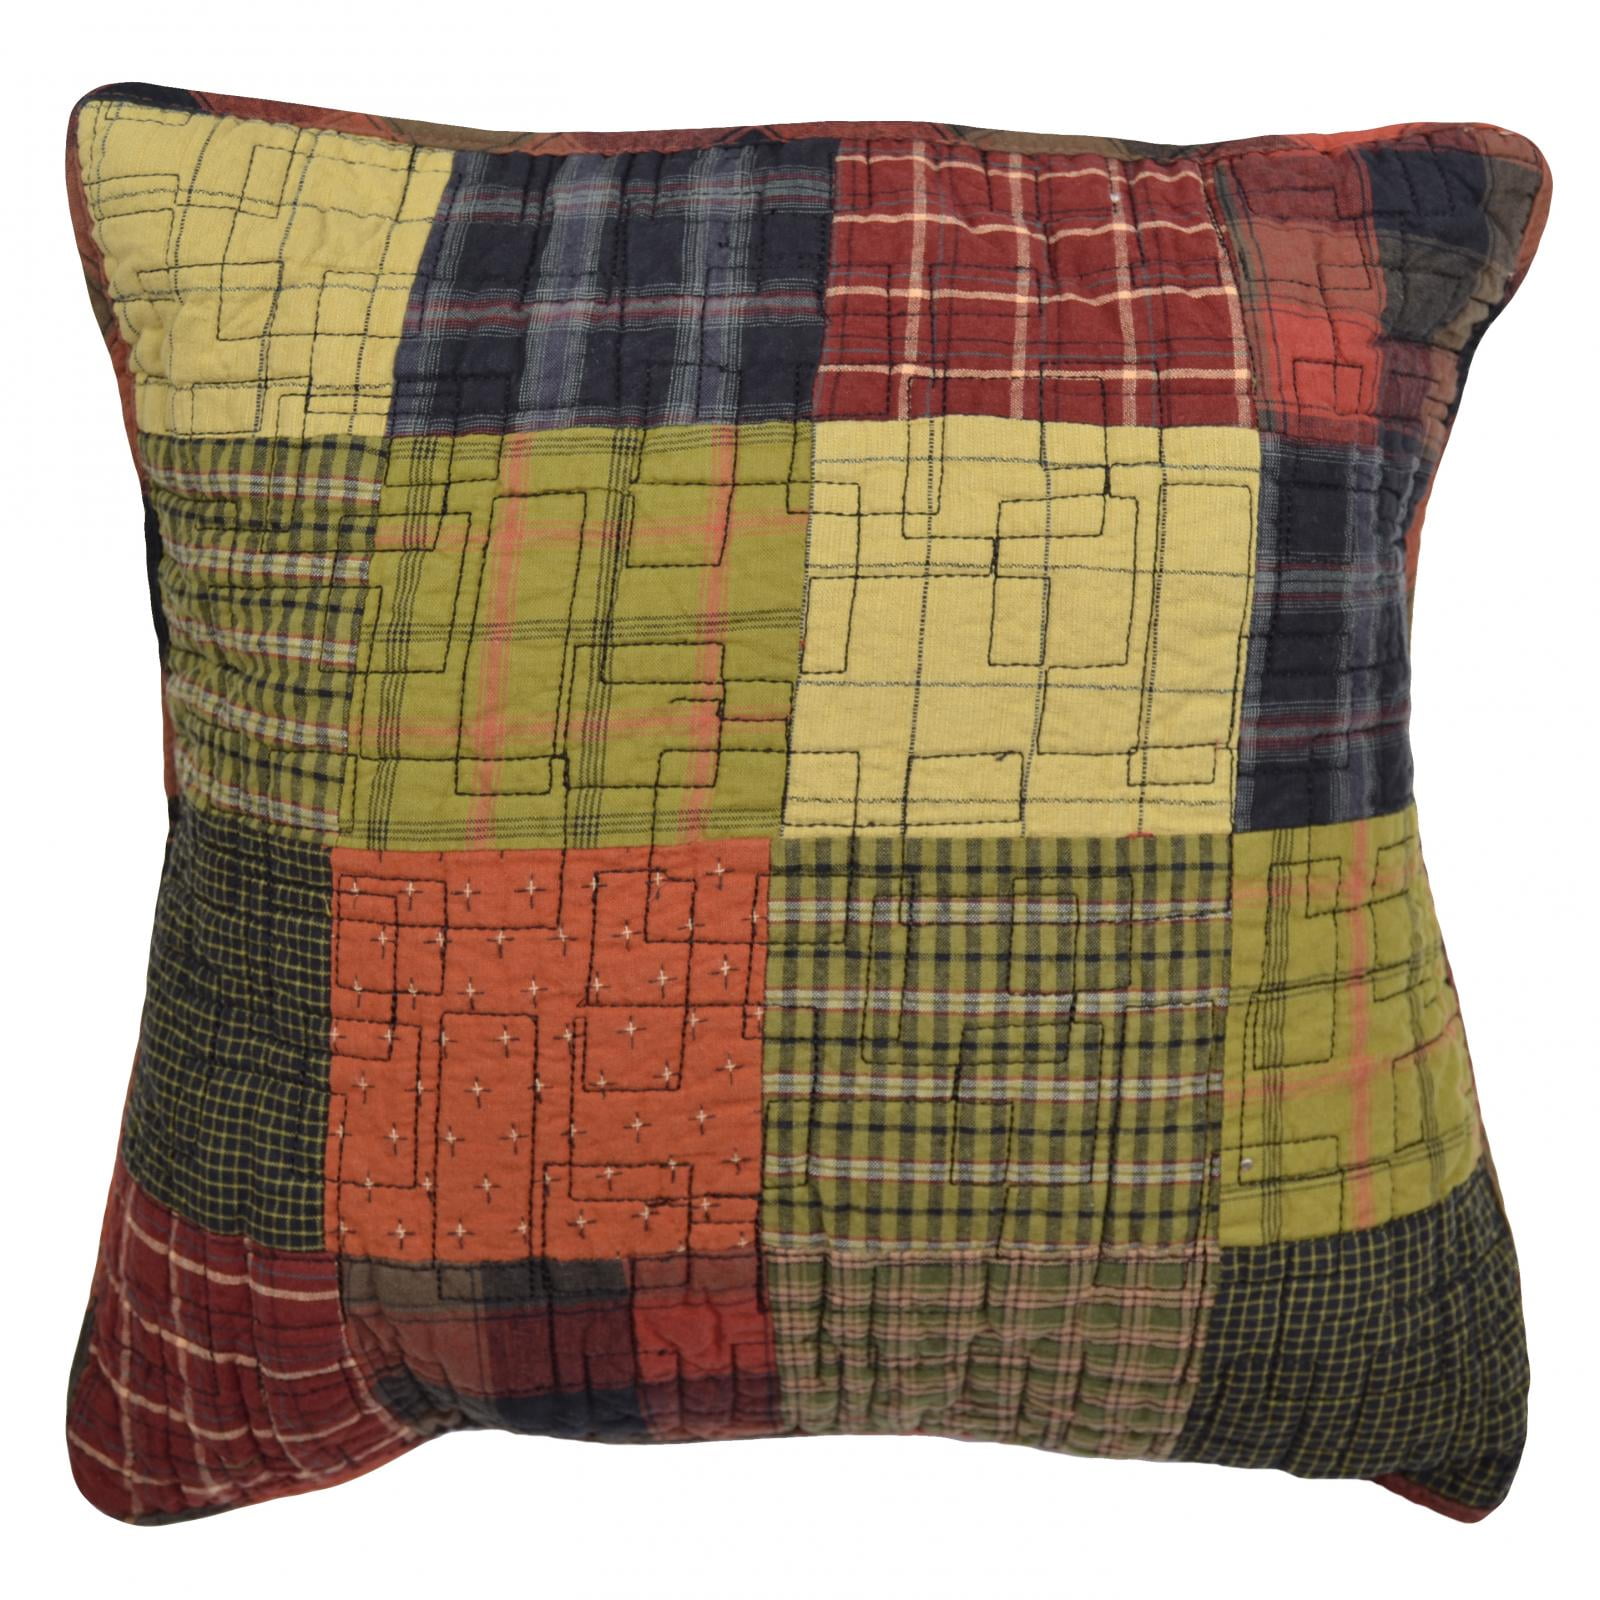 24701 15 X 15 In. Woodland Square Decorative Pillow, Multi Color